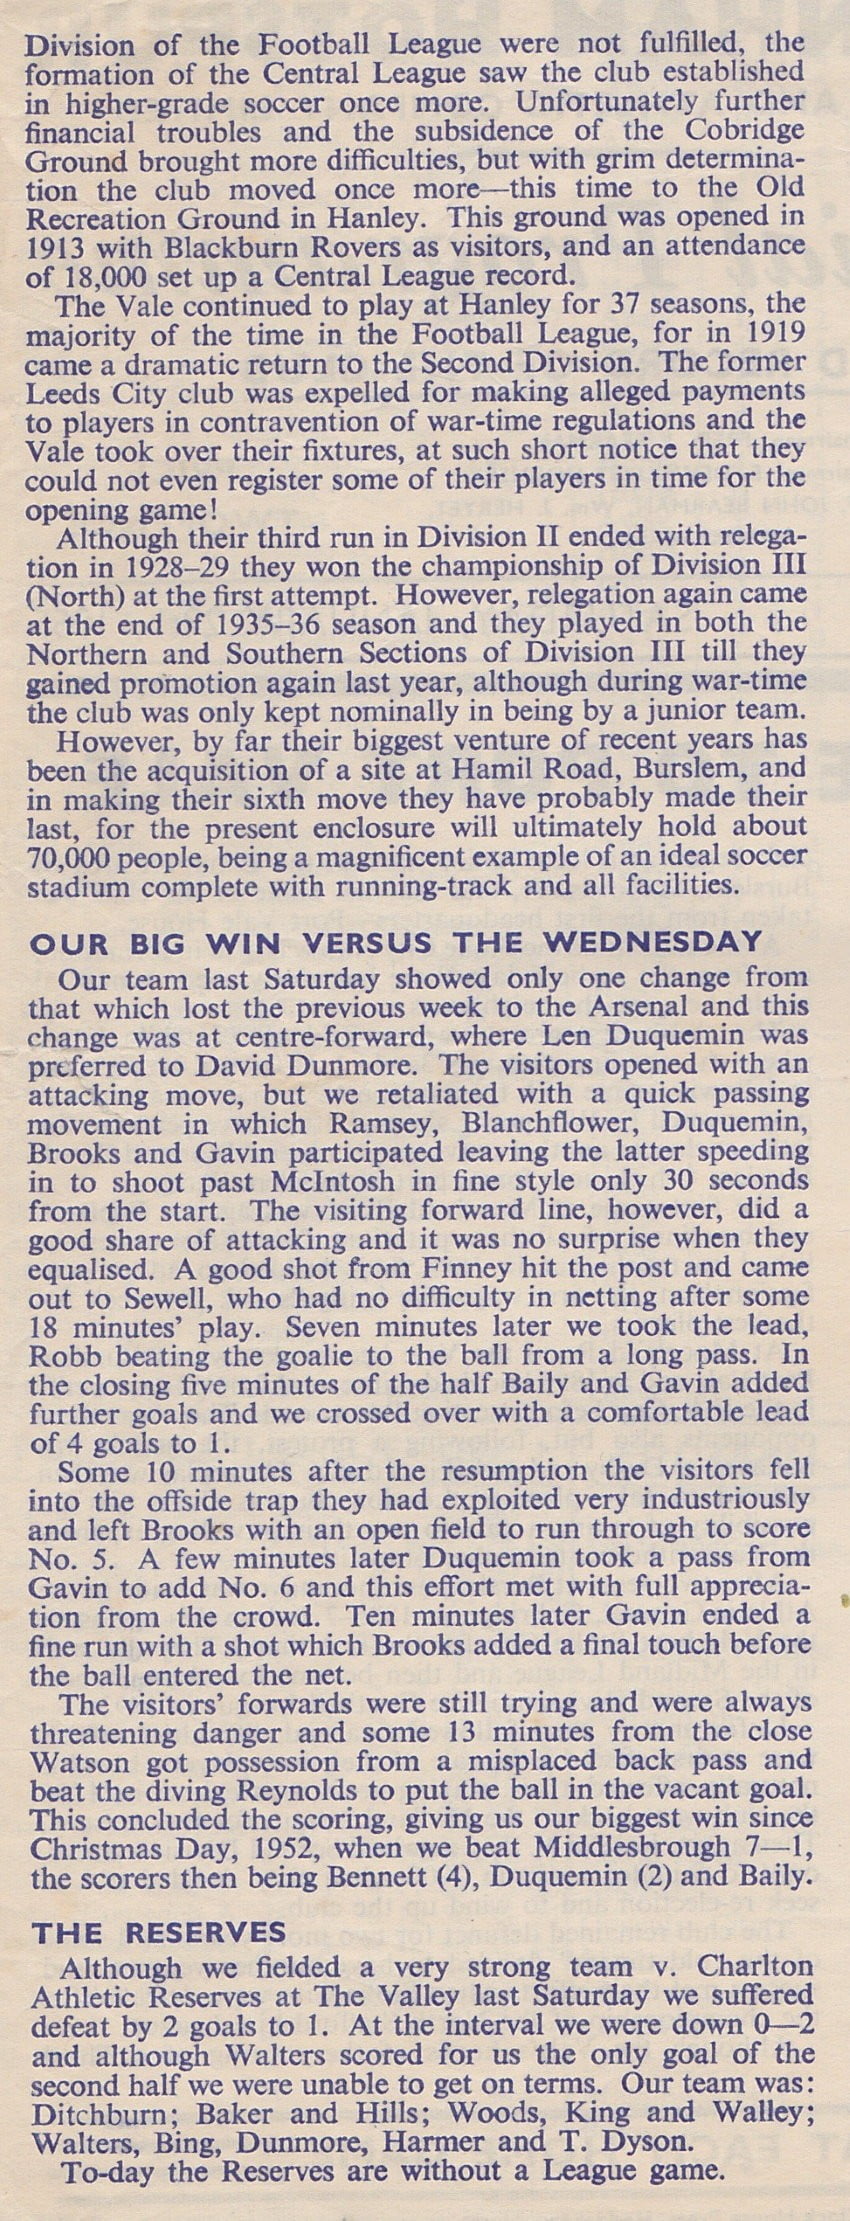 Tottenham Hotspur v Port Vale programme 1955 - inside page 2 detail